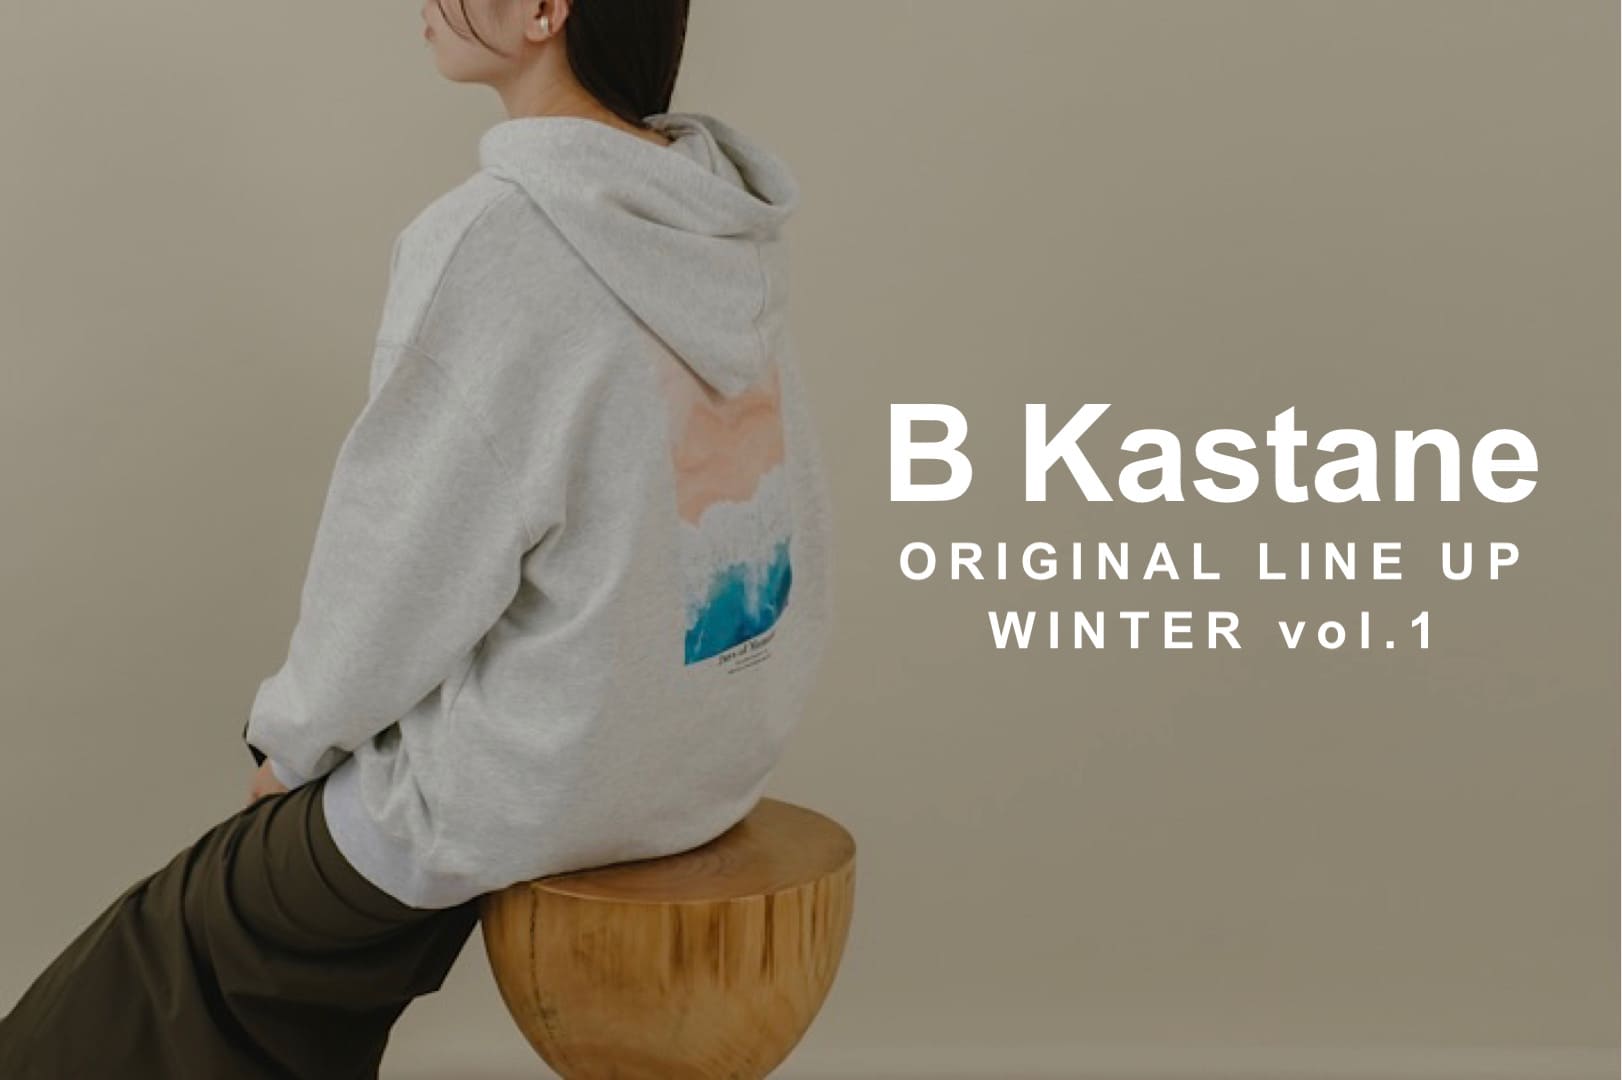 Kastane 【B Kastane】ORIGINAL LINE UP WINTER vol.1